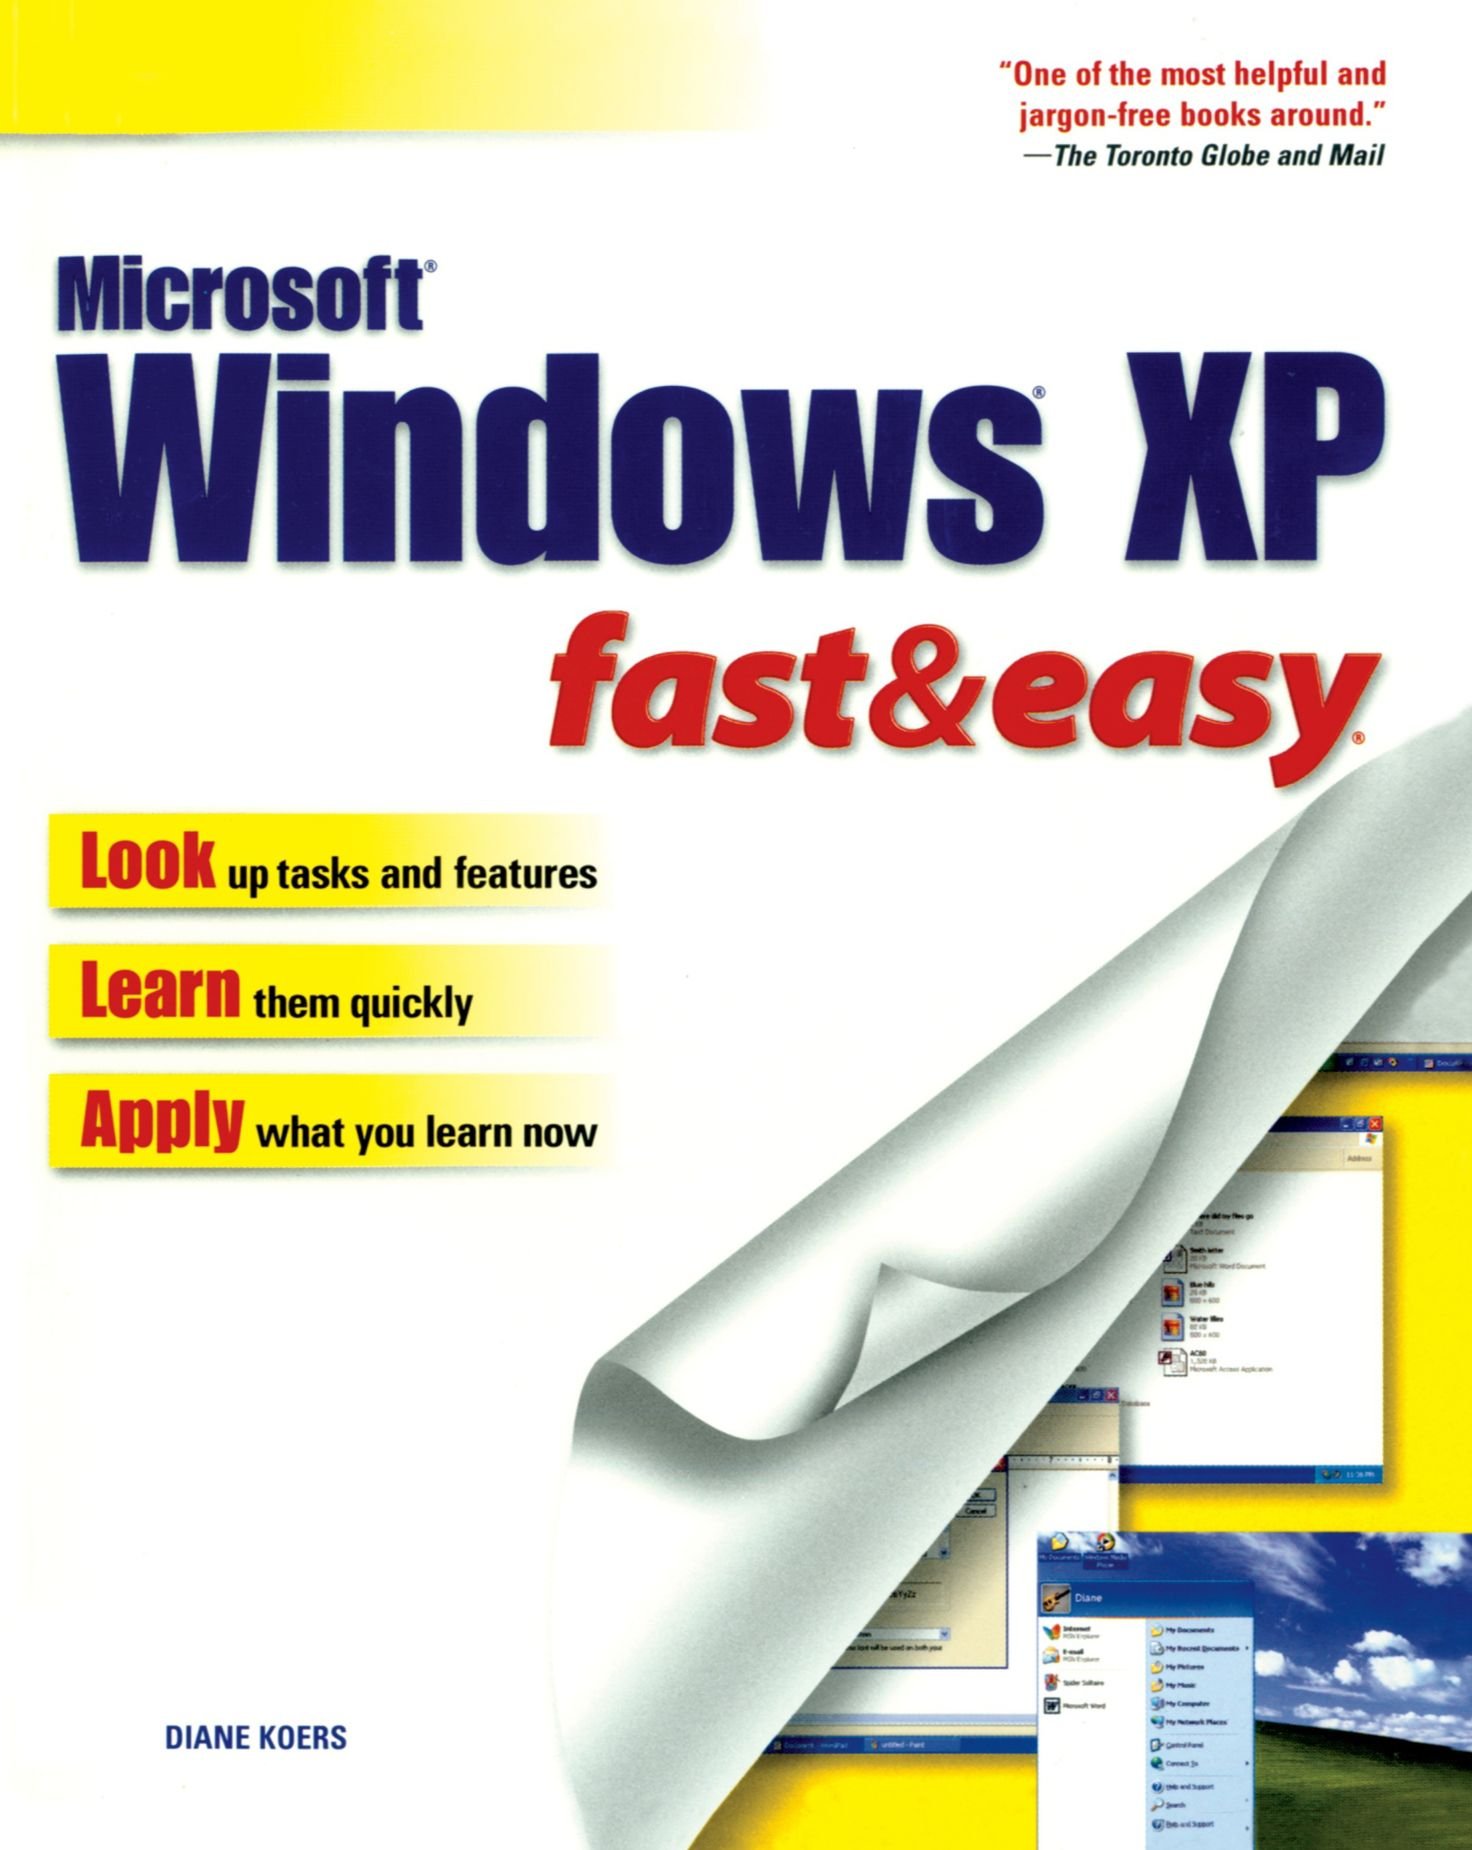 Microsoft Windows XP fast & easy